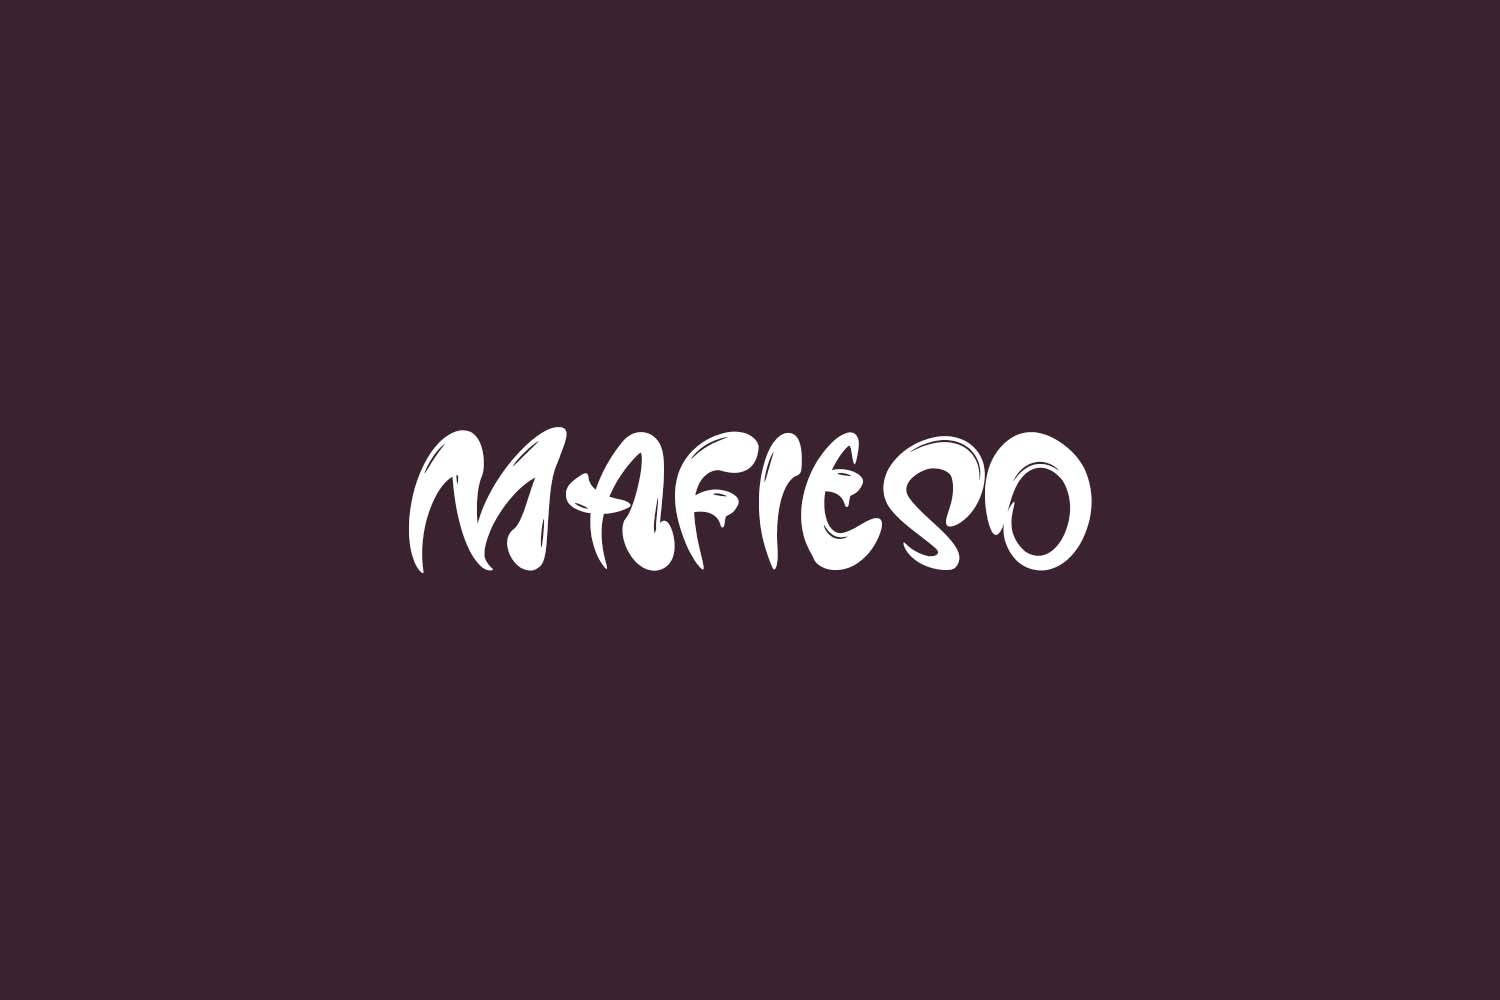 Mafieso Free Font